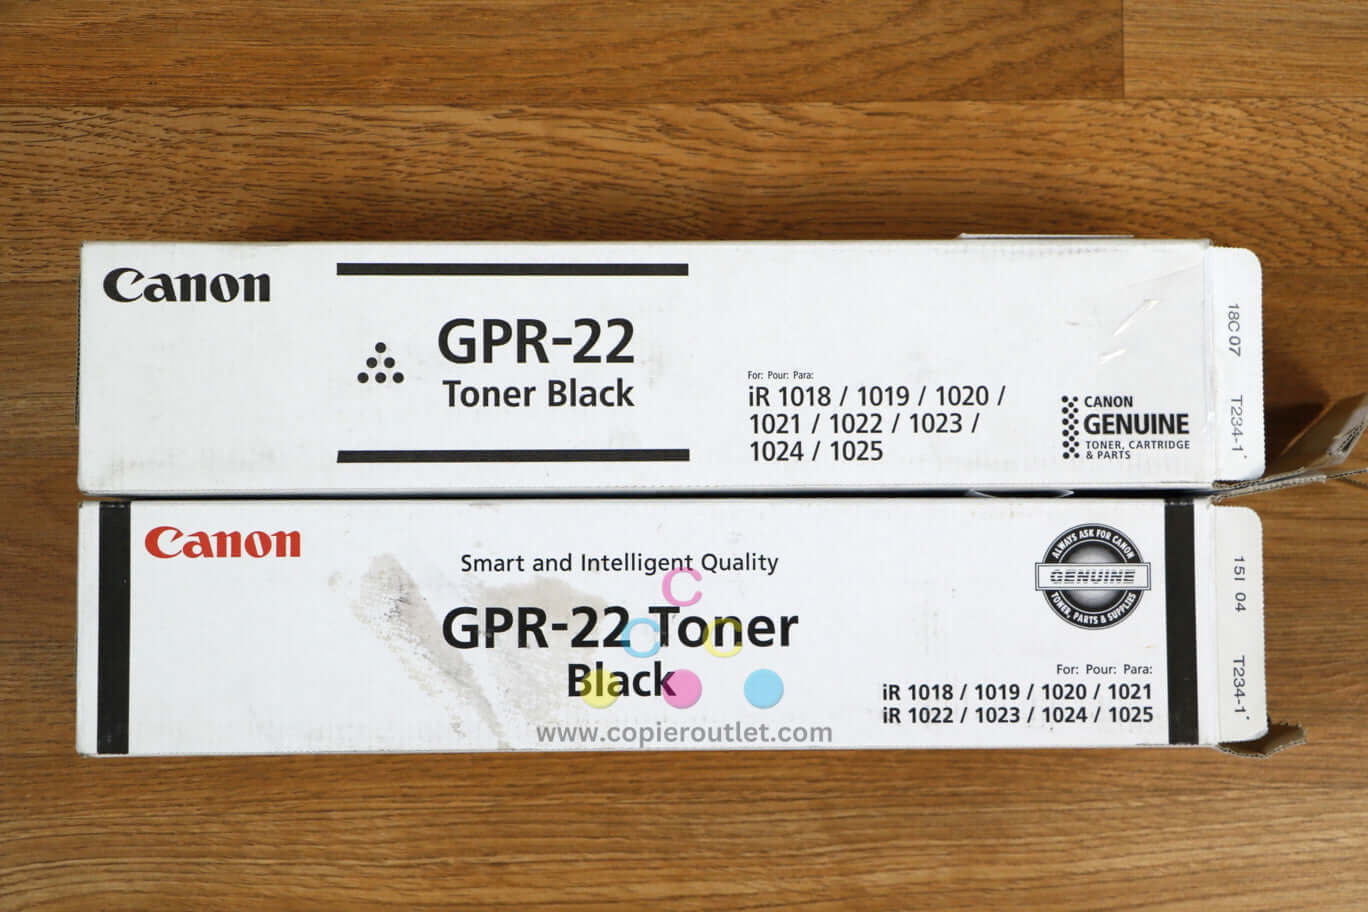 2 Open Canon GPR-22 Black Toner Cartridges iR 1018/1019/1020/1021/1023/1024/1025